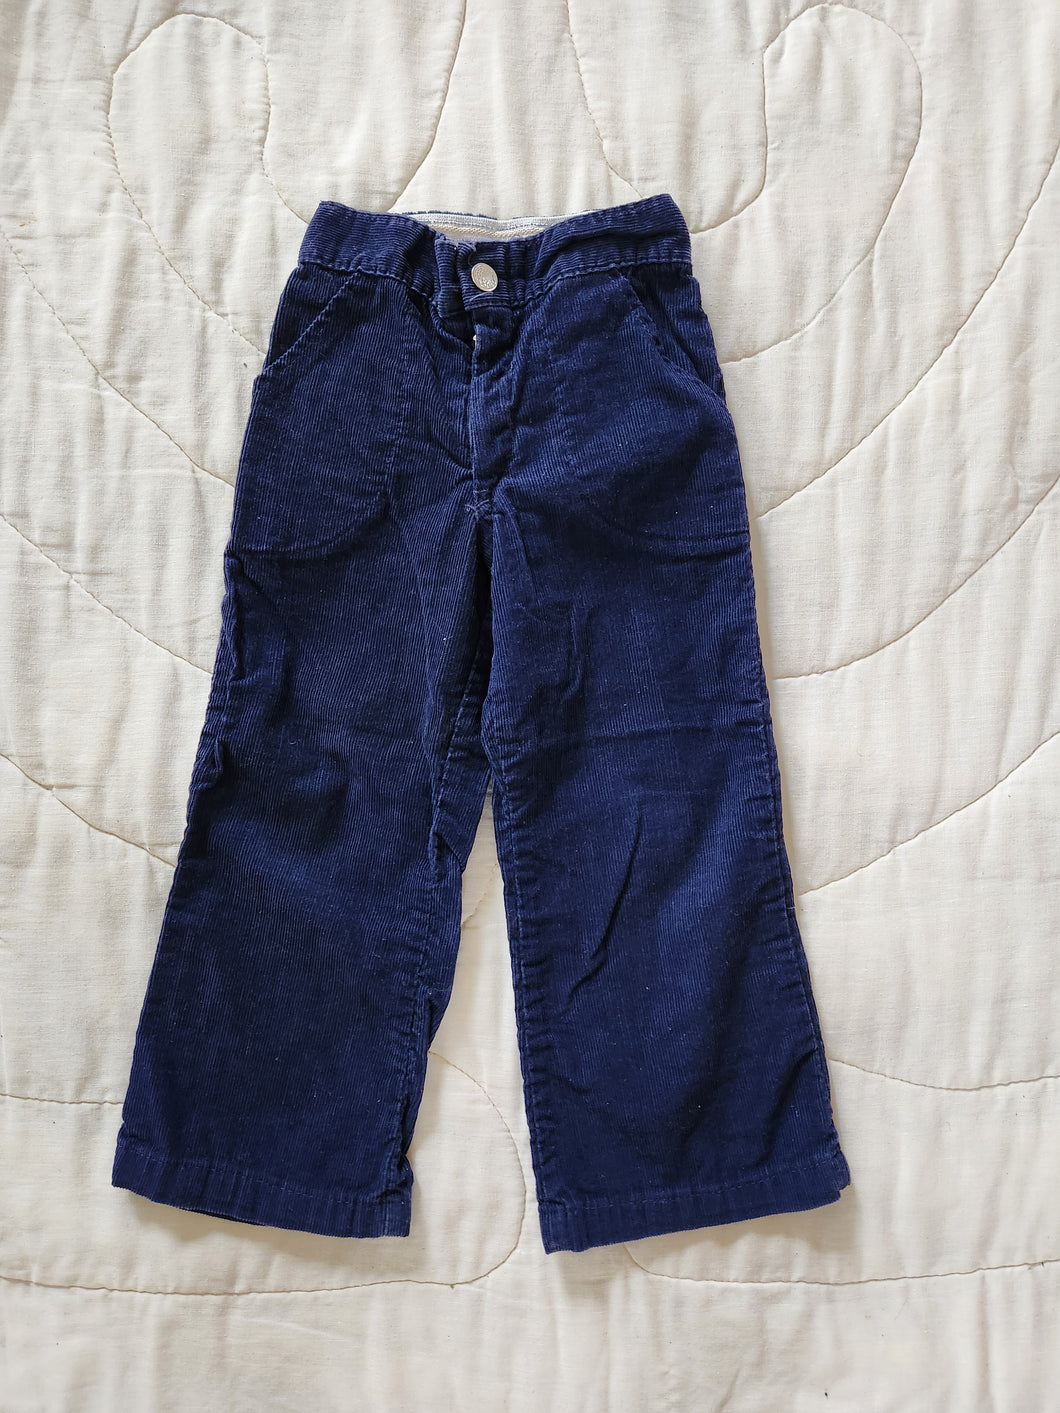 Sears Navy Corduroy Pants 4t